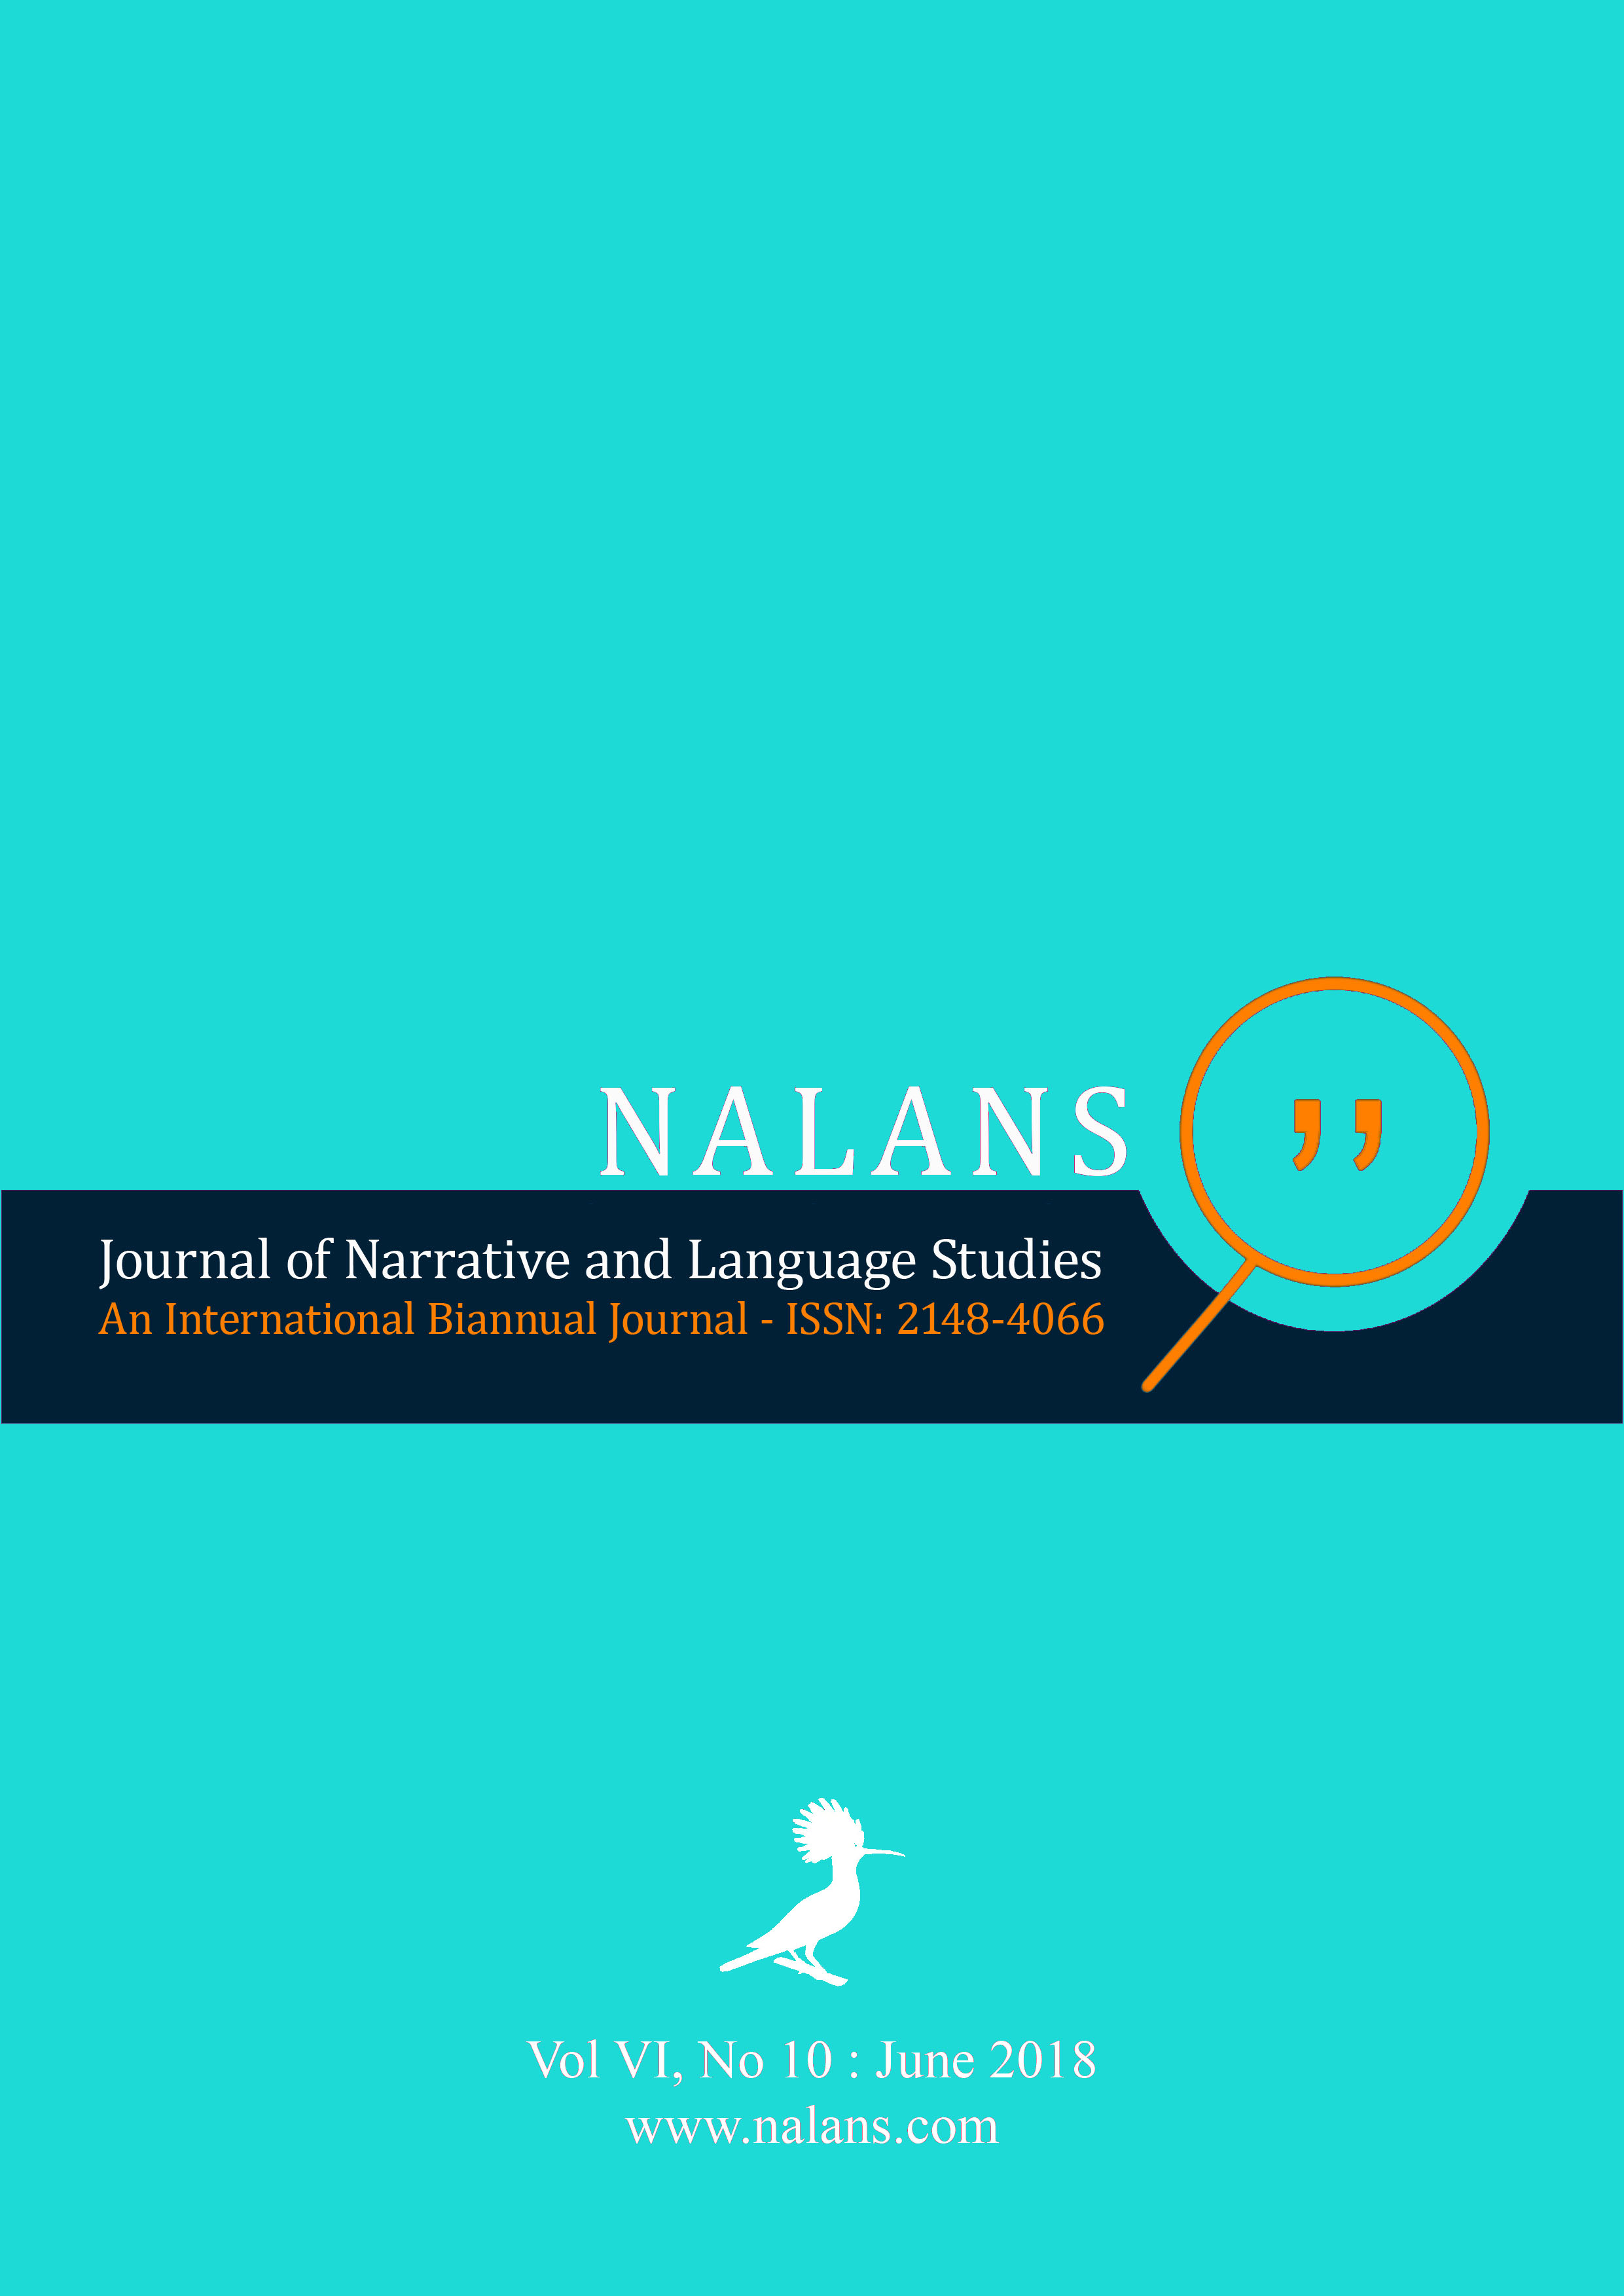 NALANS ISSUE NO 6 VOL 10 JUNE 2018